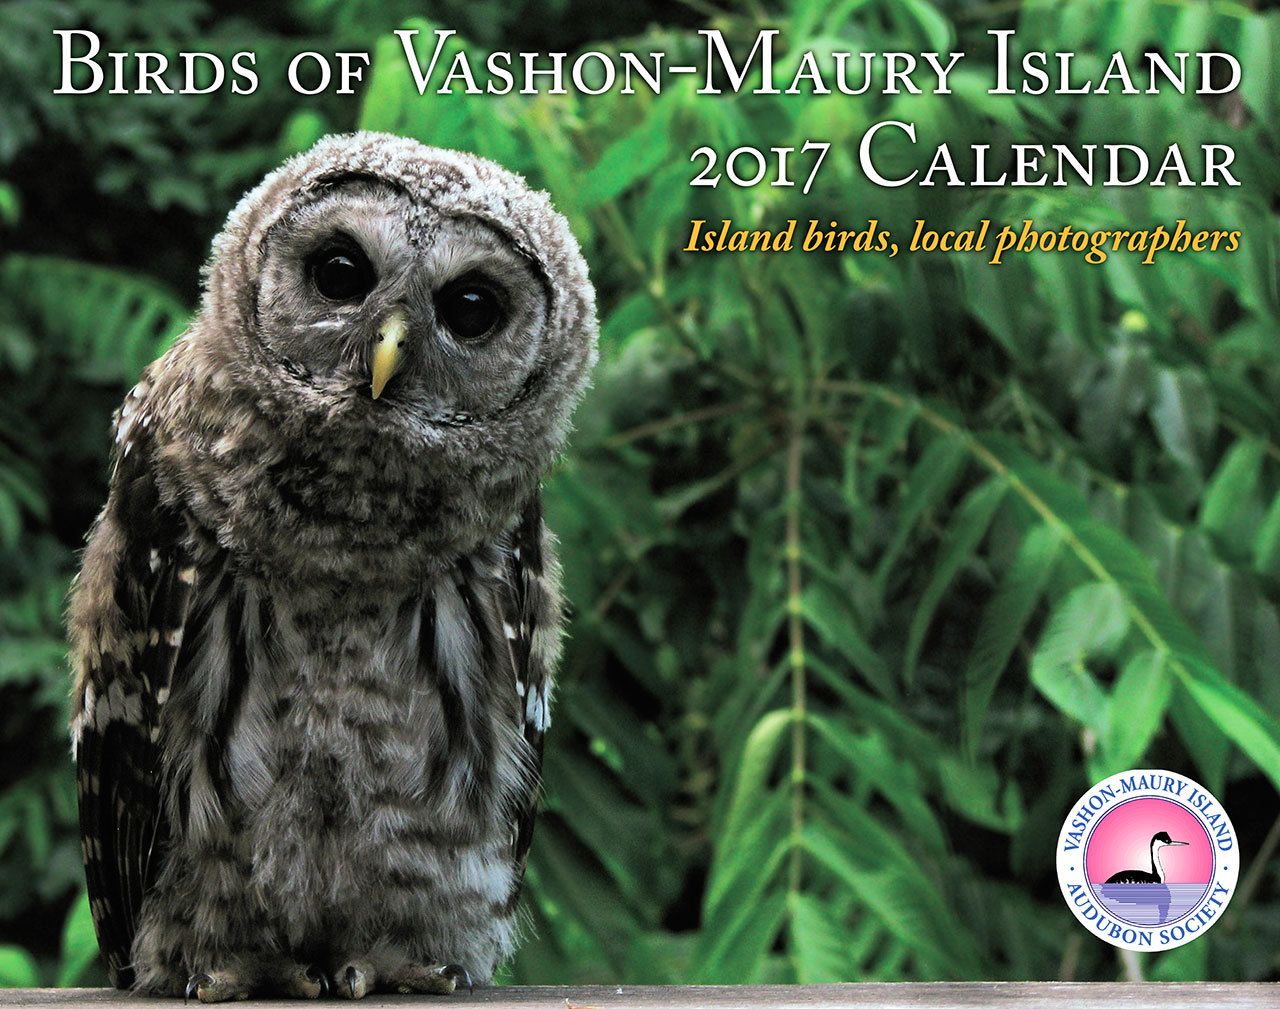 Harsi Parker Photo                                The cover of the 2017 Audubon Society calendar.